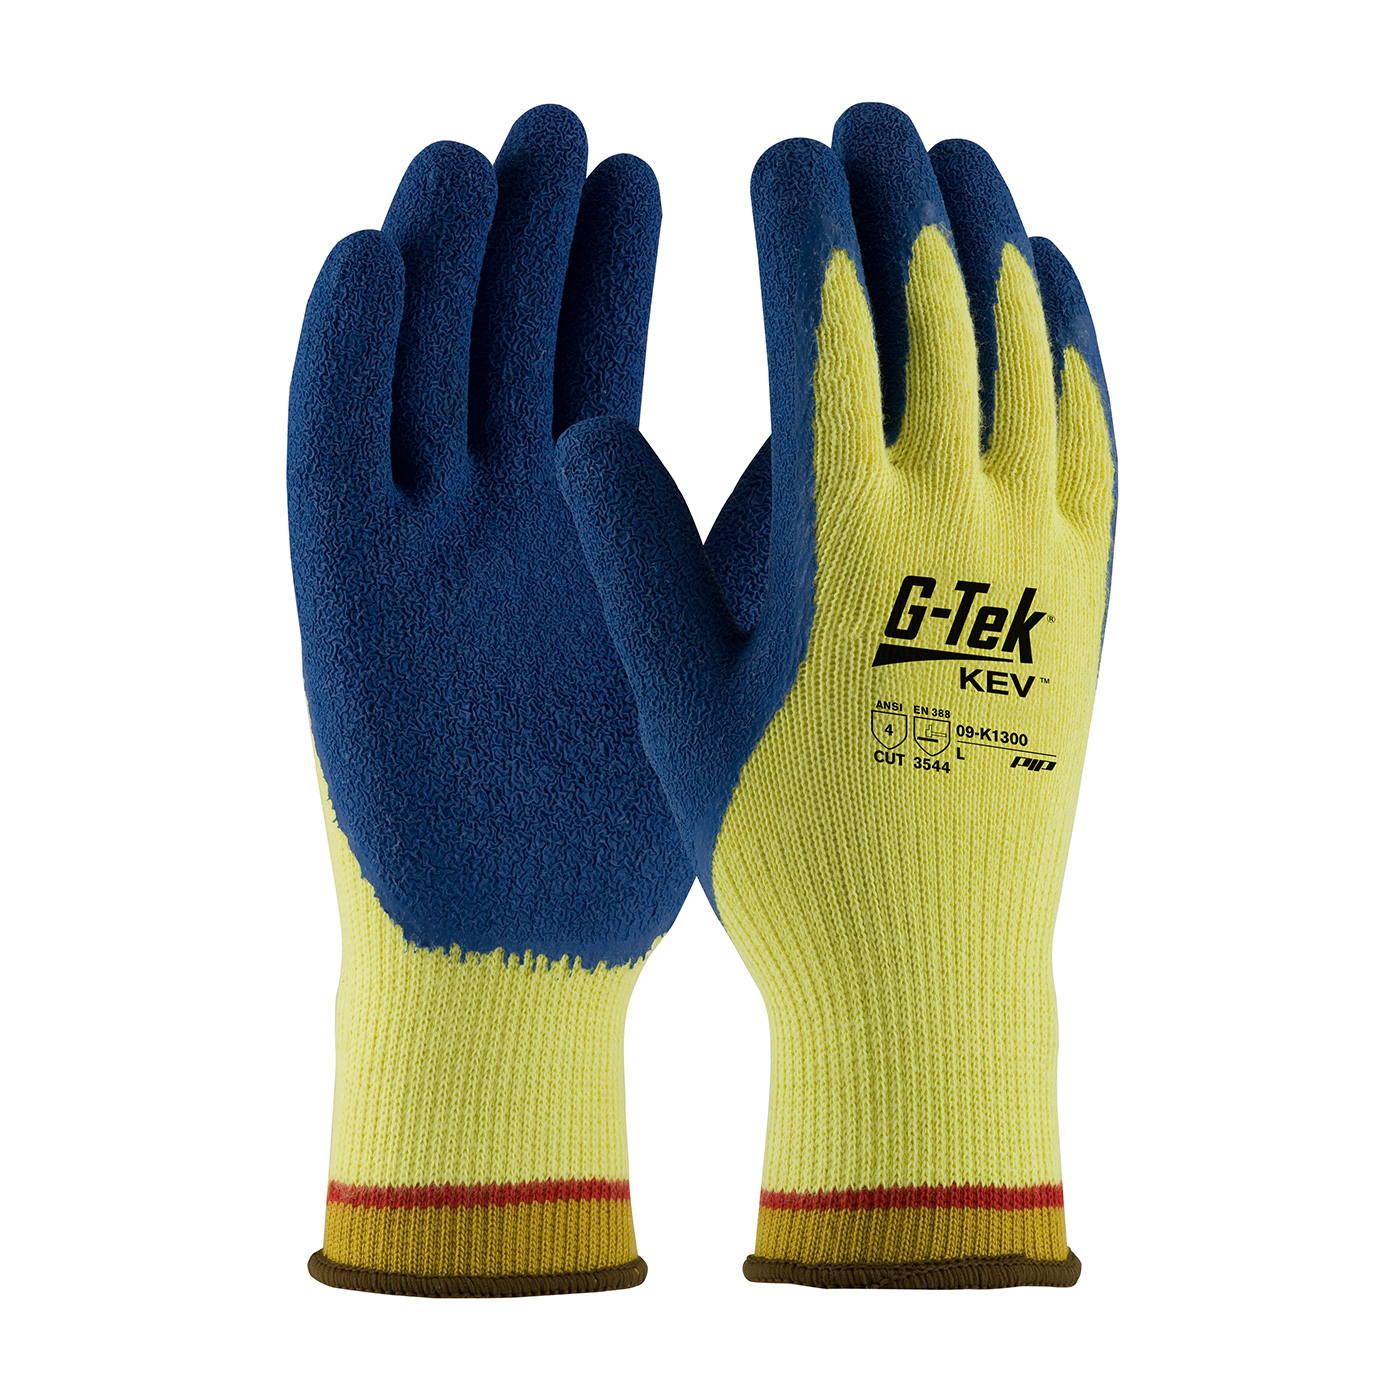 #09-K1300 PIP G-Tek® KEV Latex Coated Cut-Resistant Protective Work Gloves. Cut level 4.